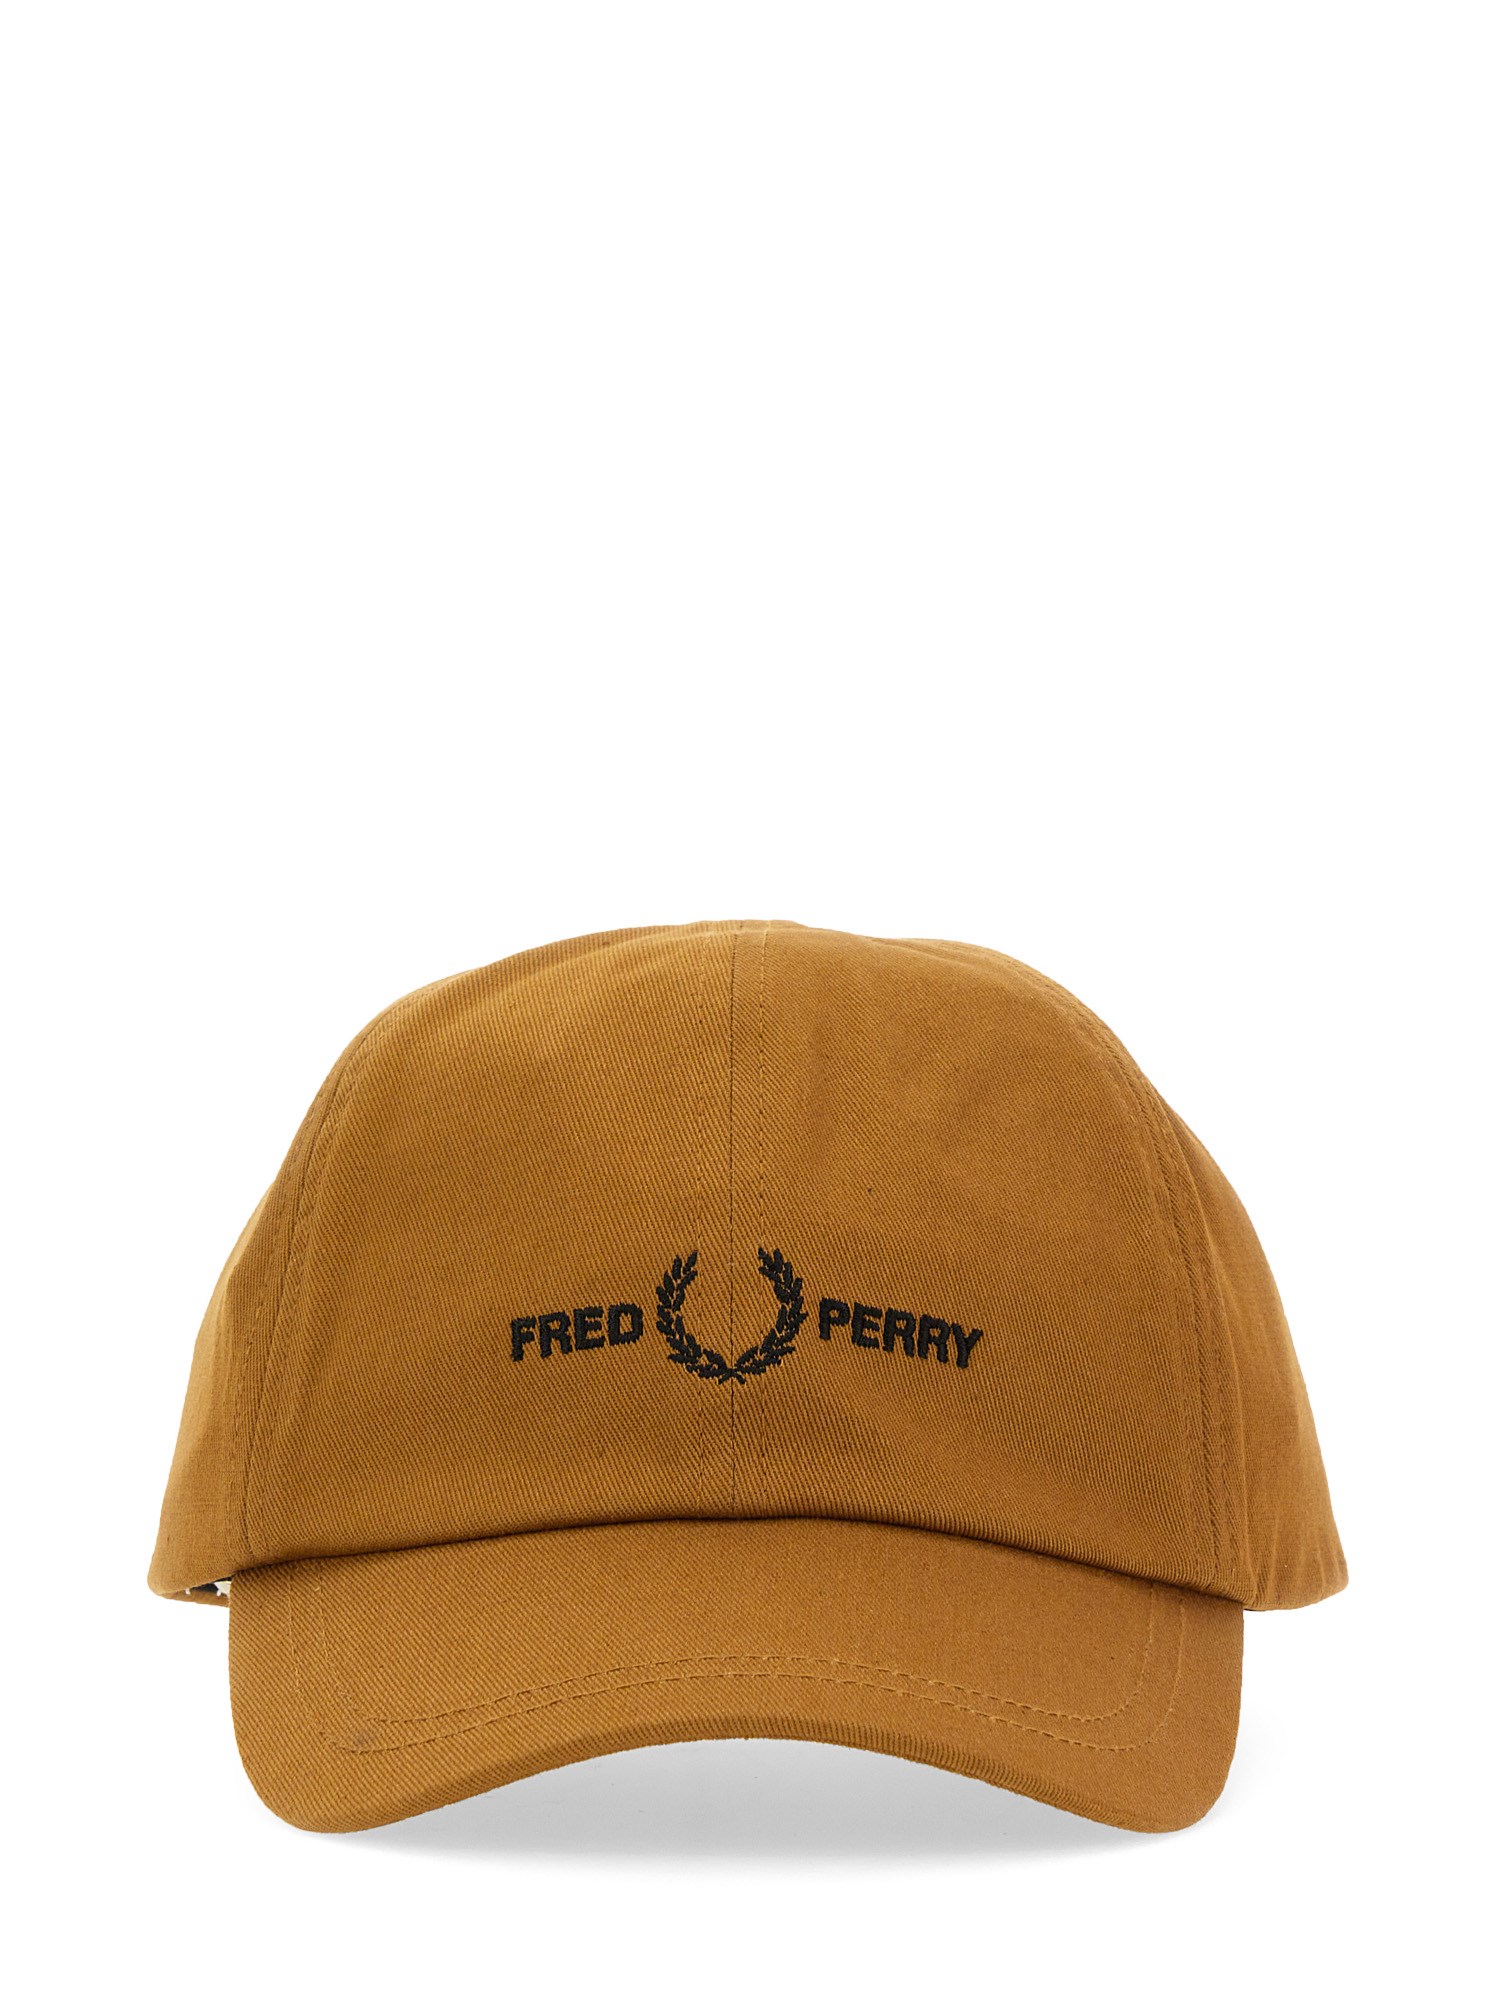 FRED PERRY BASEBALL CAP 